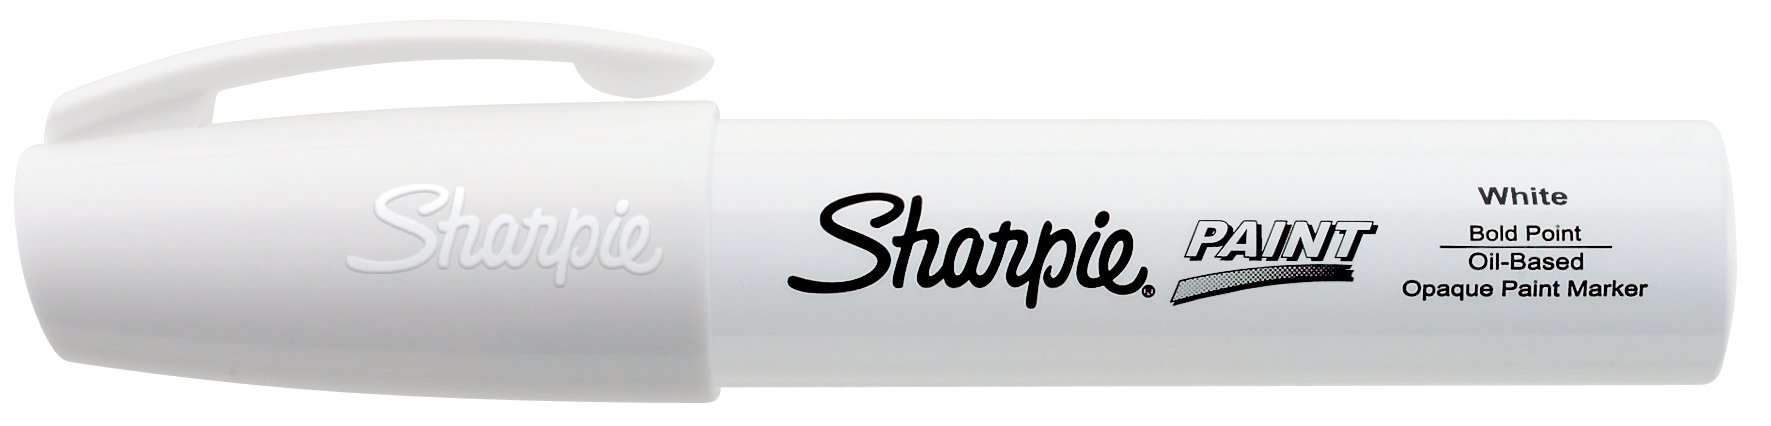 Sharpie Medium Point White Ink Oilased Paint Marker Pack of 3